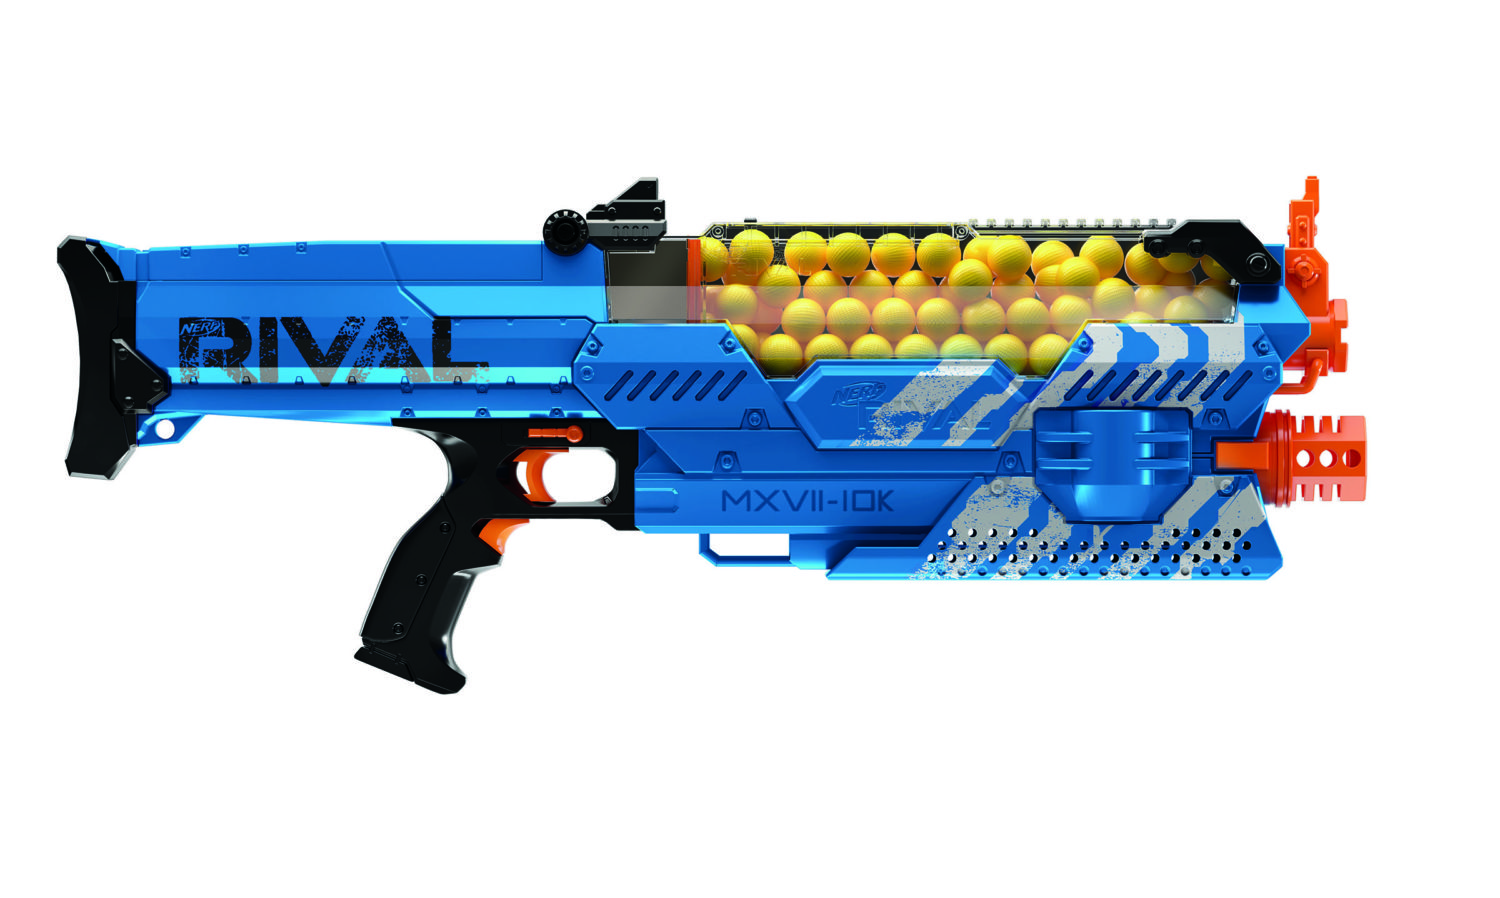 Blue Nerf Rival Nemesis MXVII-10K